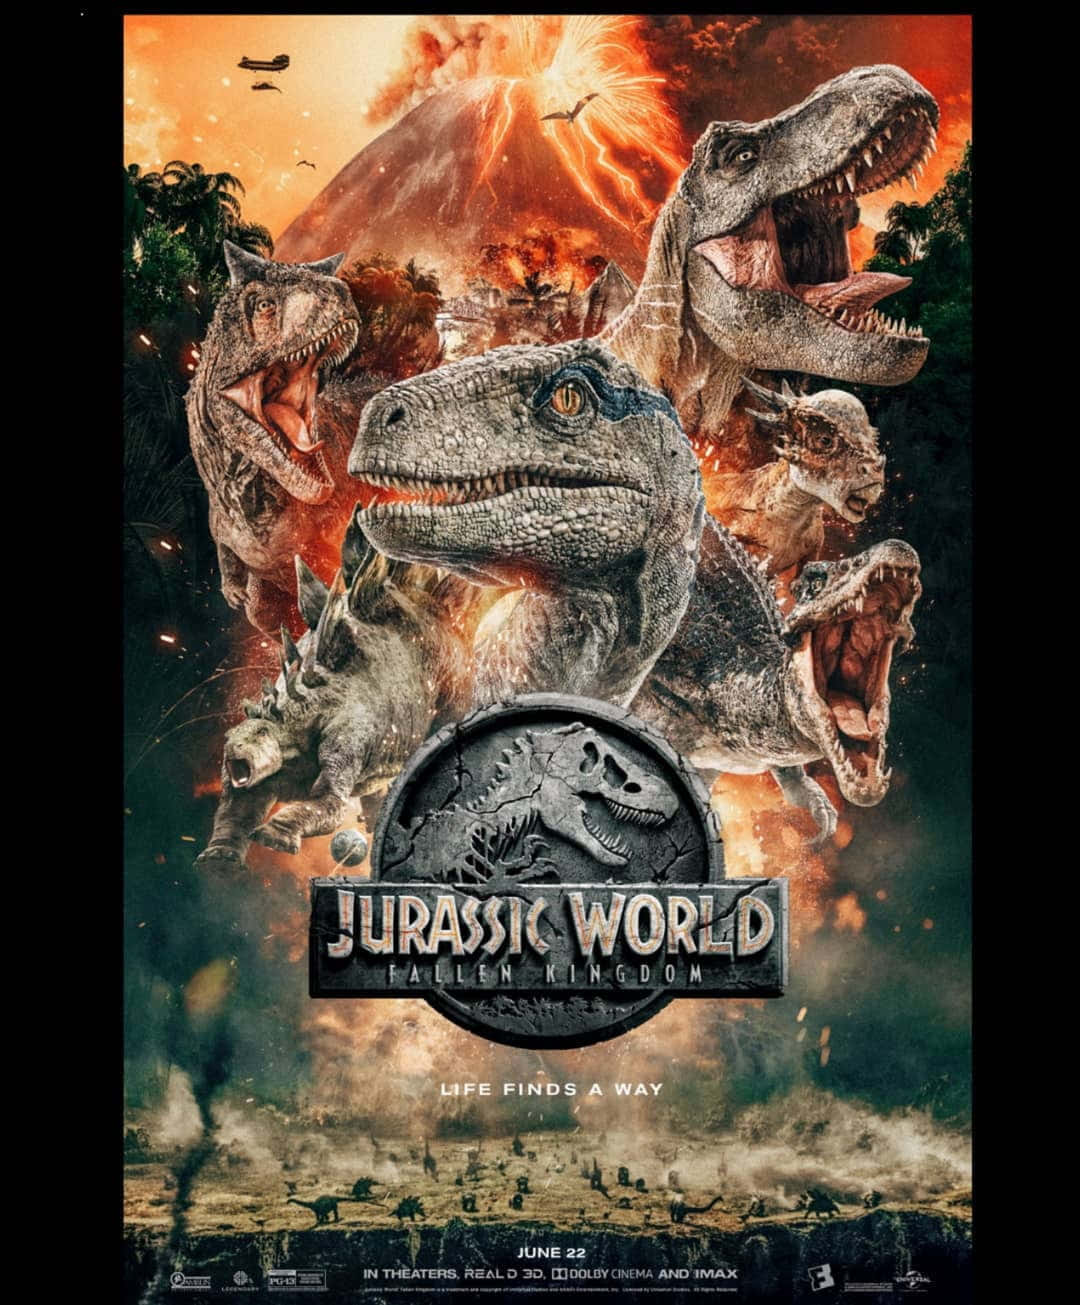 Dinosaurierjurassic World Fallen Kingdom Bild.